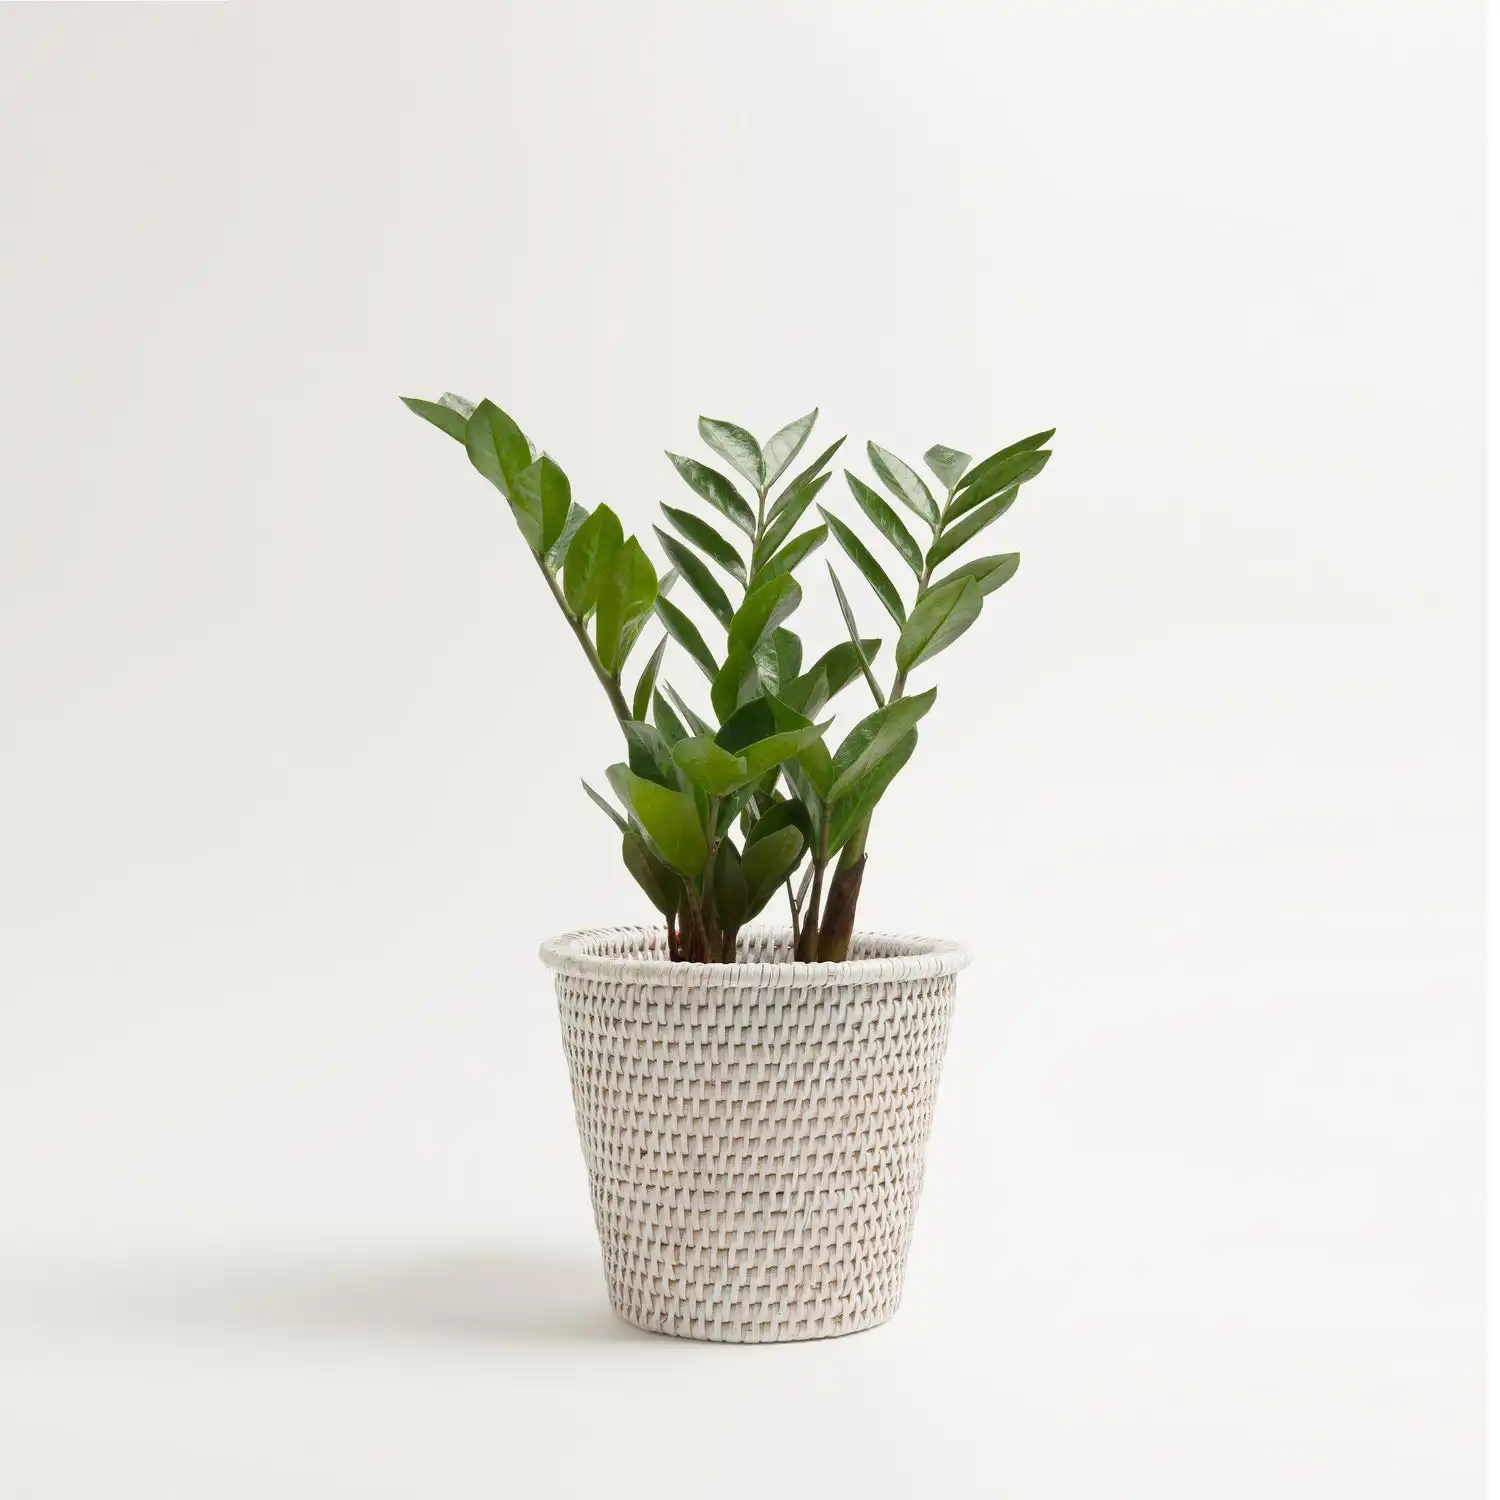 New latest design white natural rattan planter pot basket garden accessories wholesale wicker planters pots best gifts